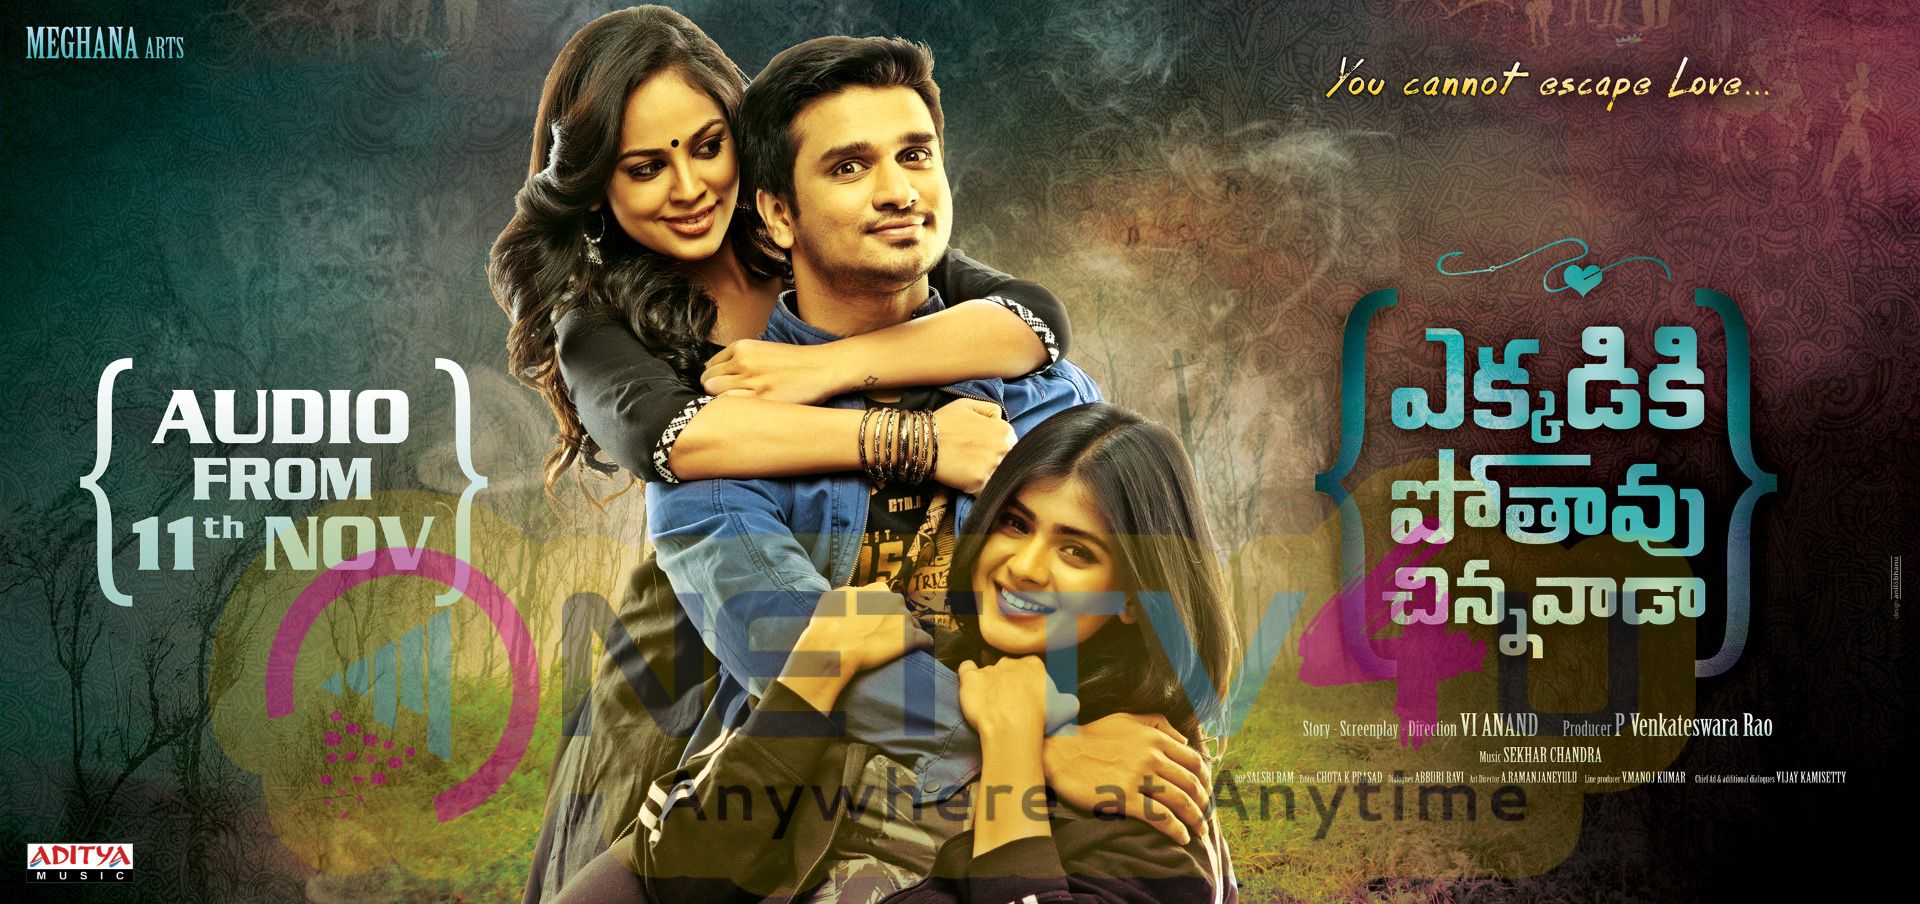 Ekkadiki Pothavu Chinnavada Telugu Movie Today Audio Launch Poster Telugu Gallery